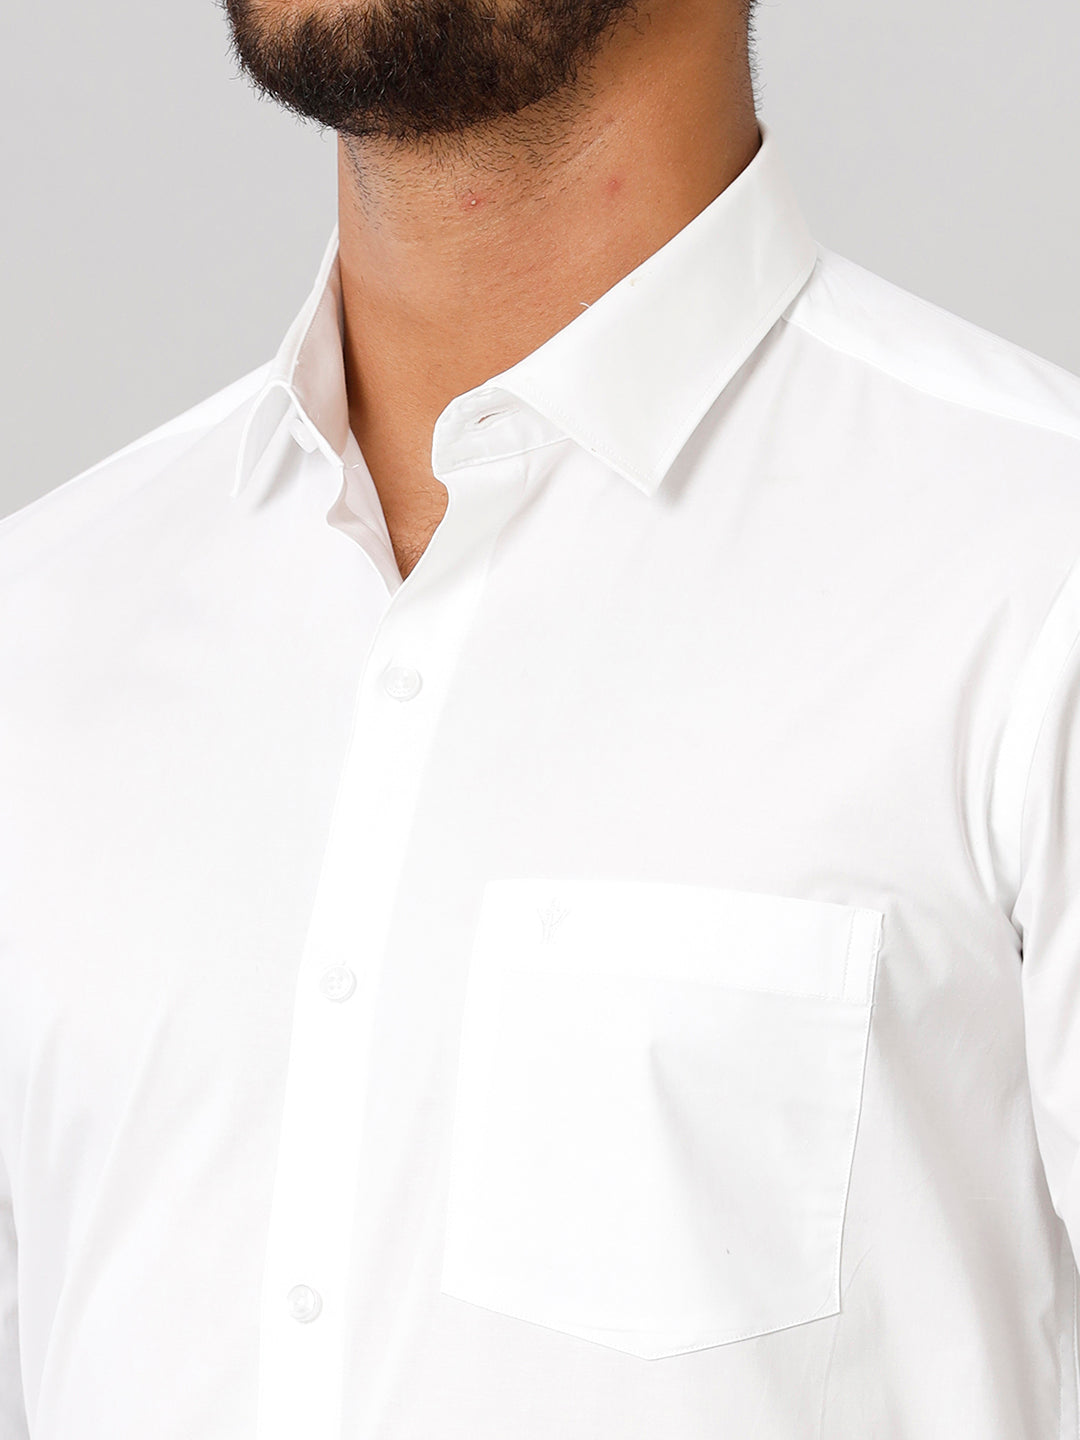 Mens Uniform Pure Cotton White Shirt Full Sleeves-Zoom view